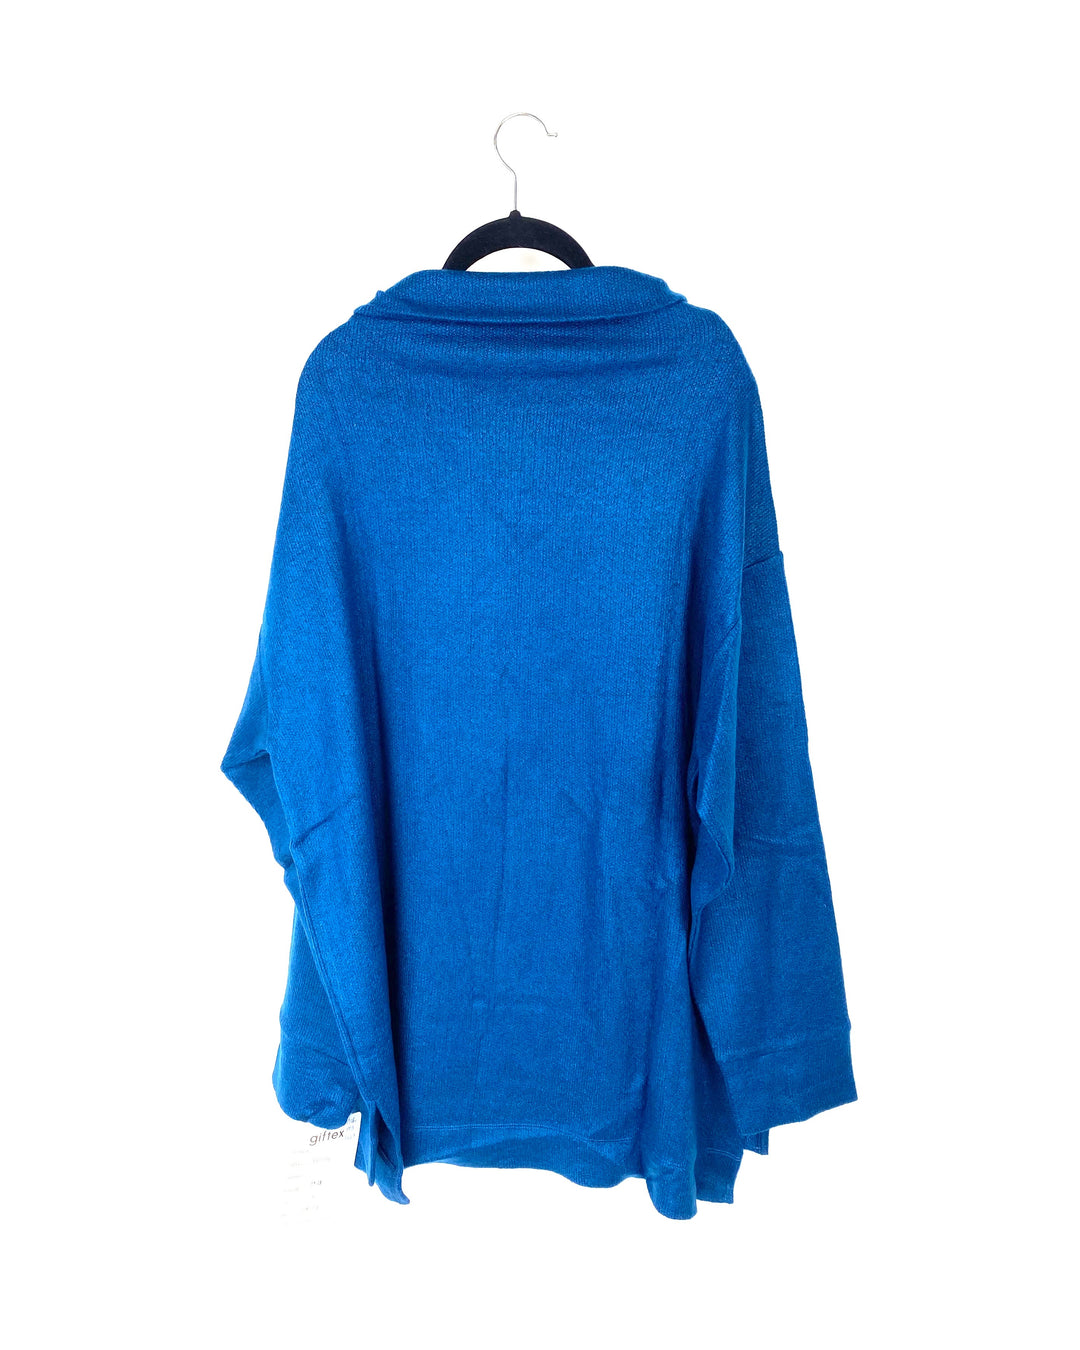 Blue Oversized Sweater - Size 6/8